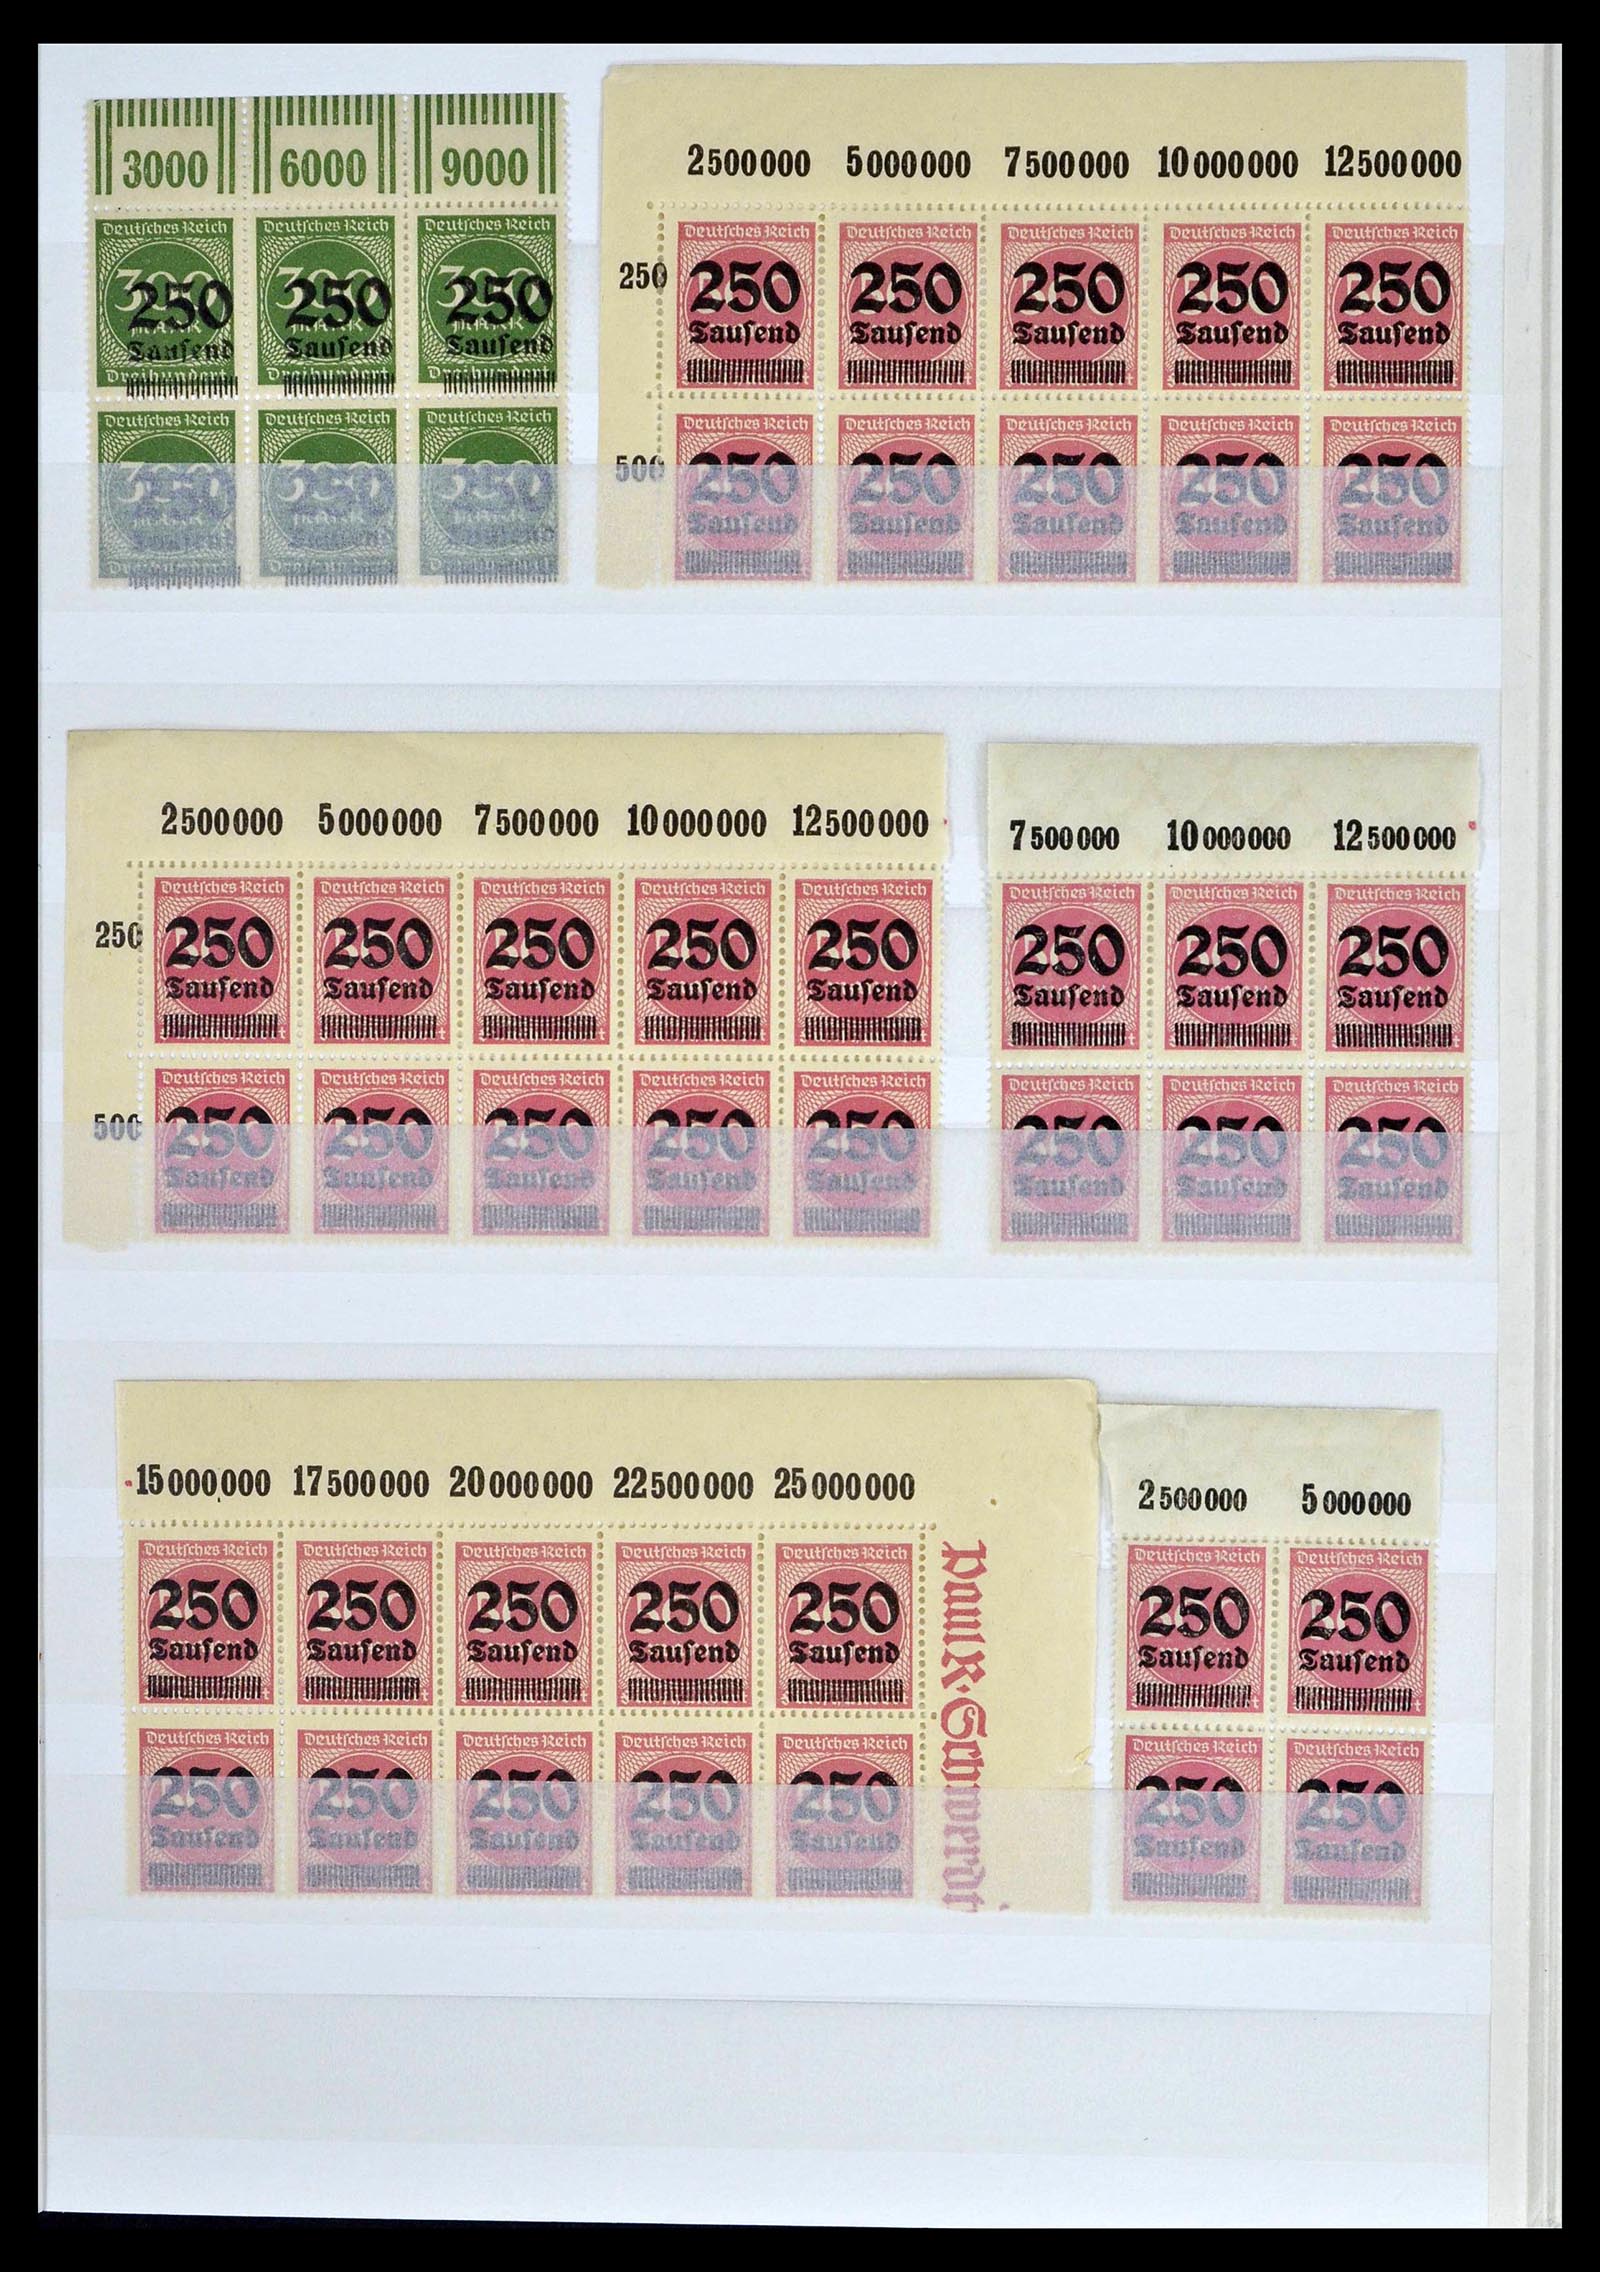 39254 0051 - Stamp collection 39254 German Reich MNH top margins.